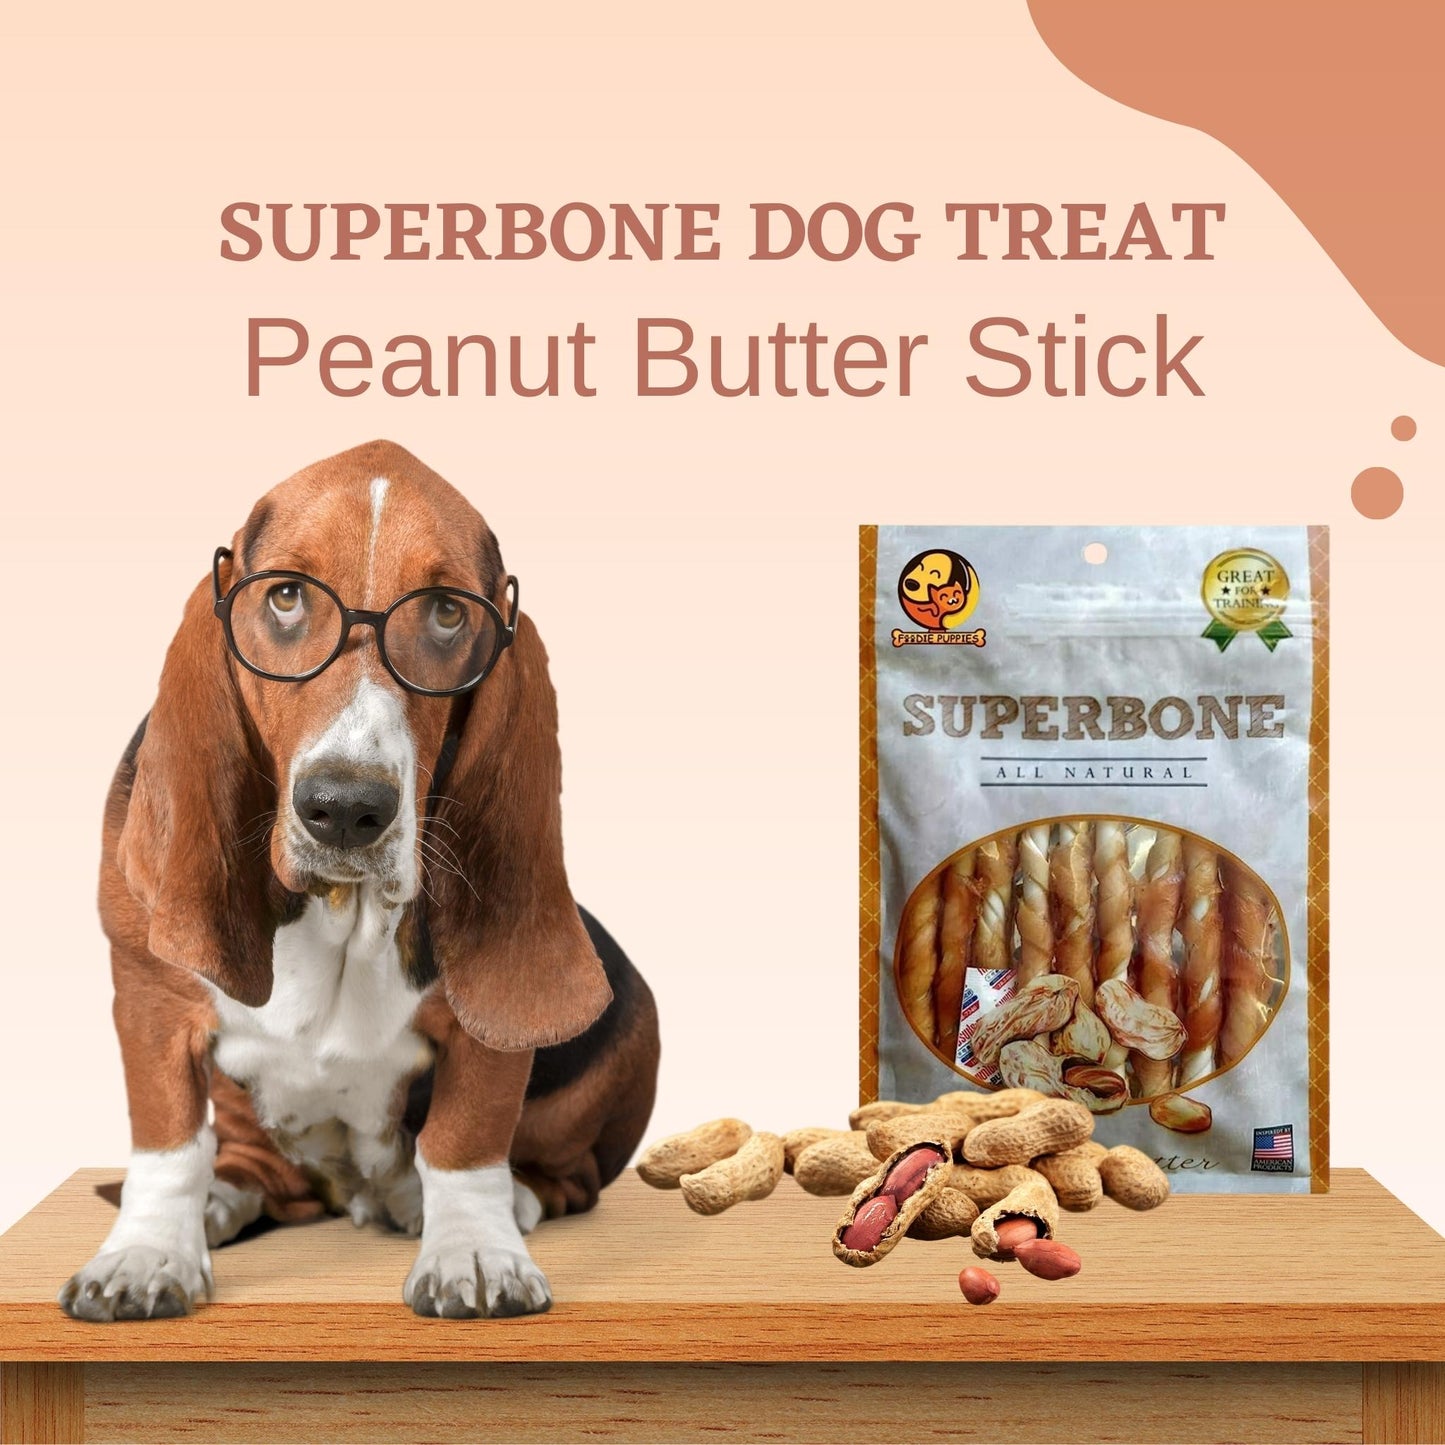 SuperBone All Natural Peanut Butter Stick Dog Treat - Pack of 2